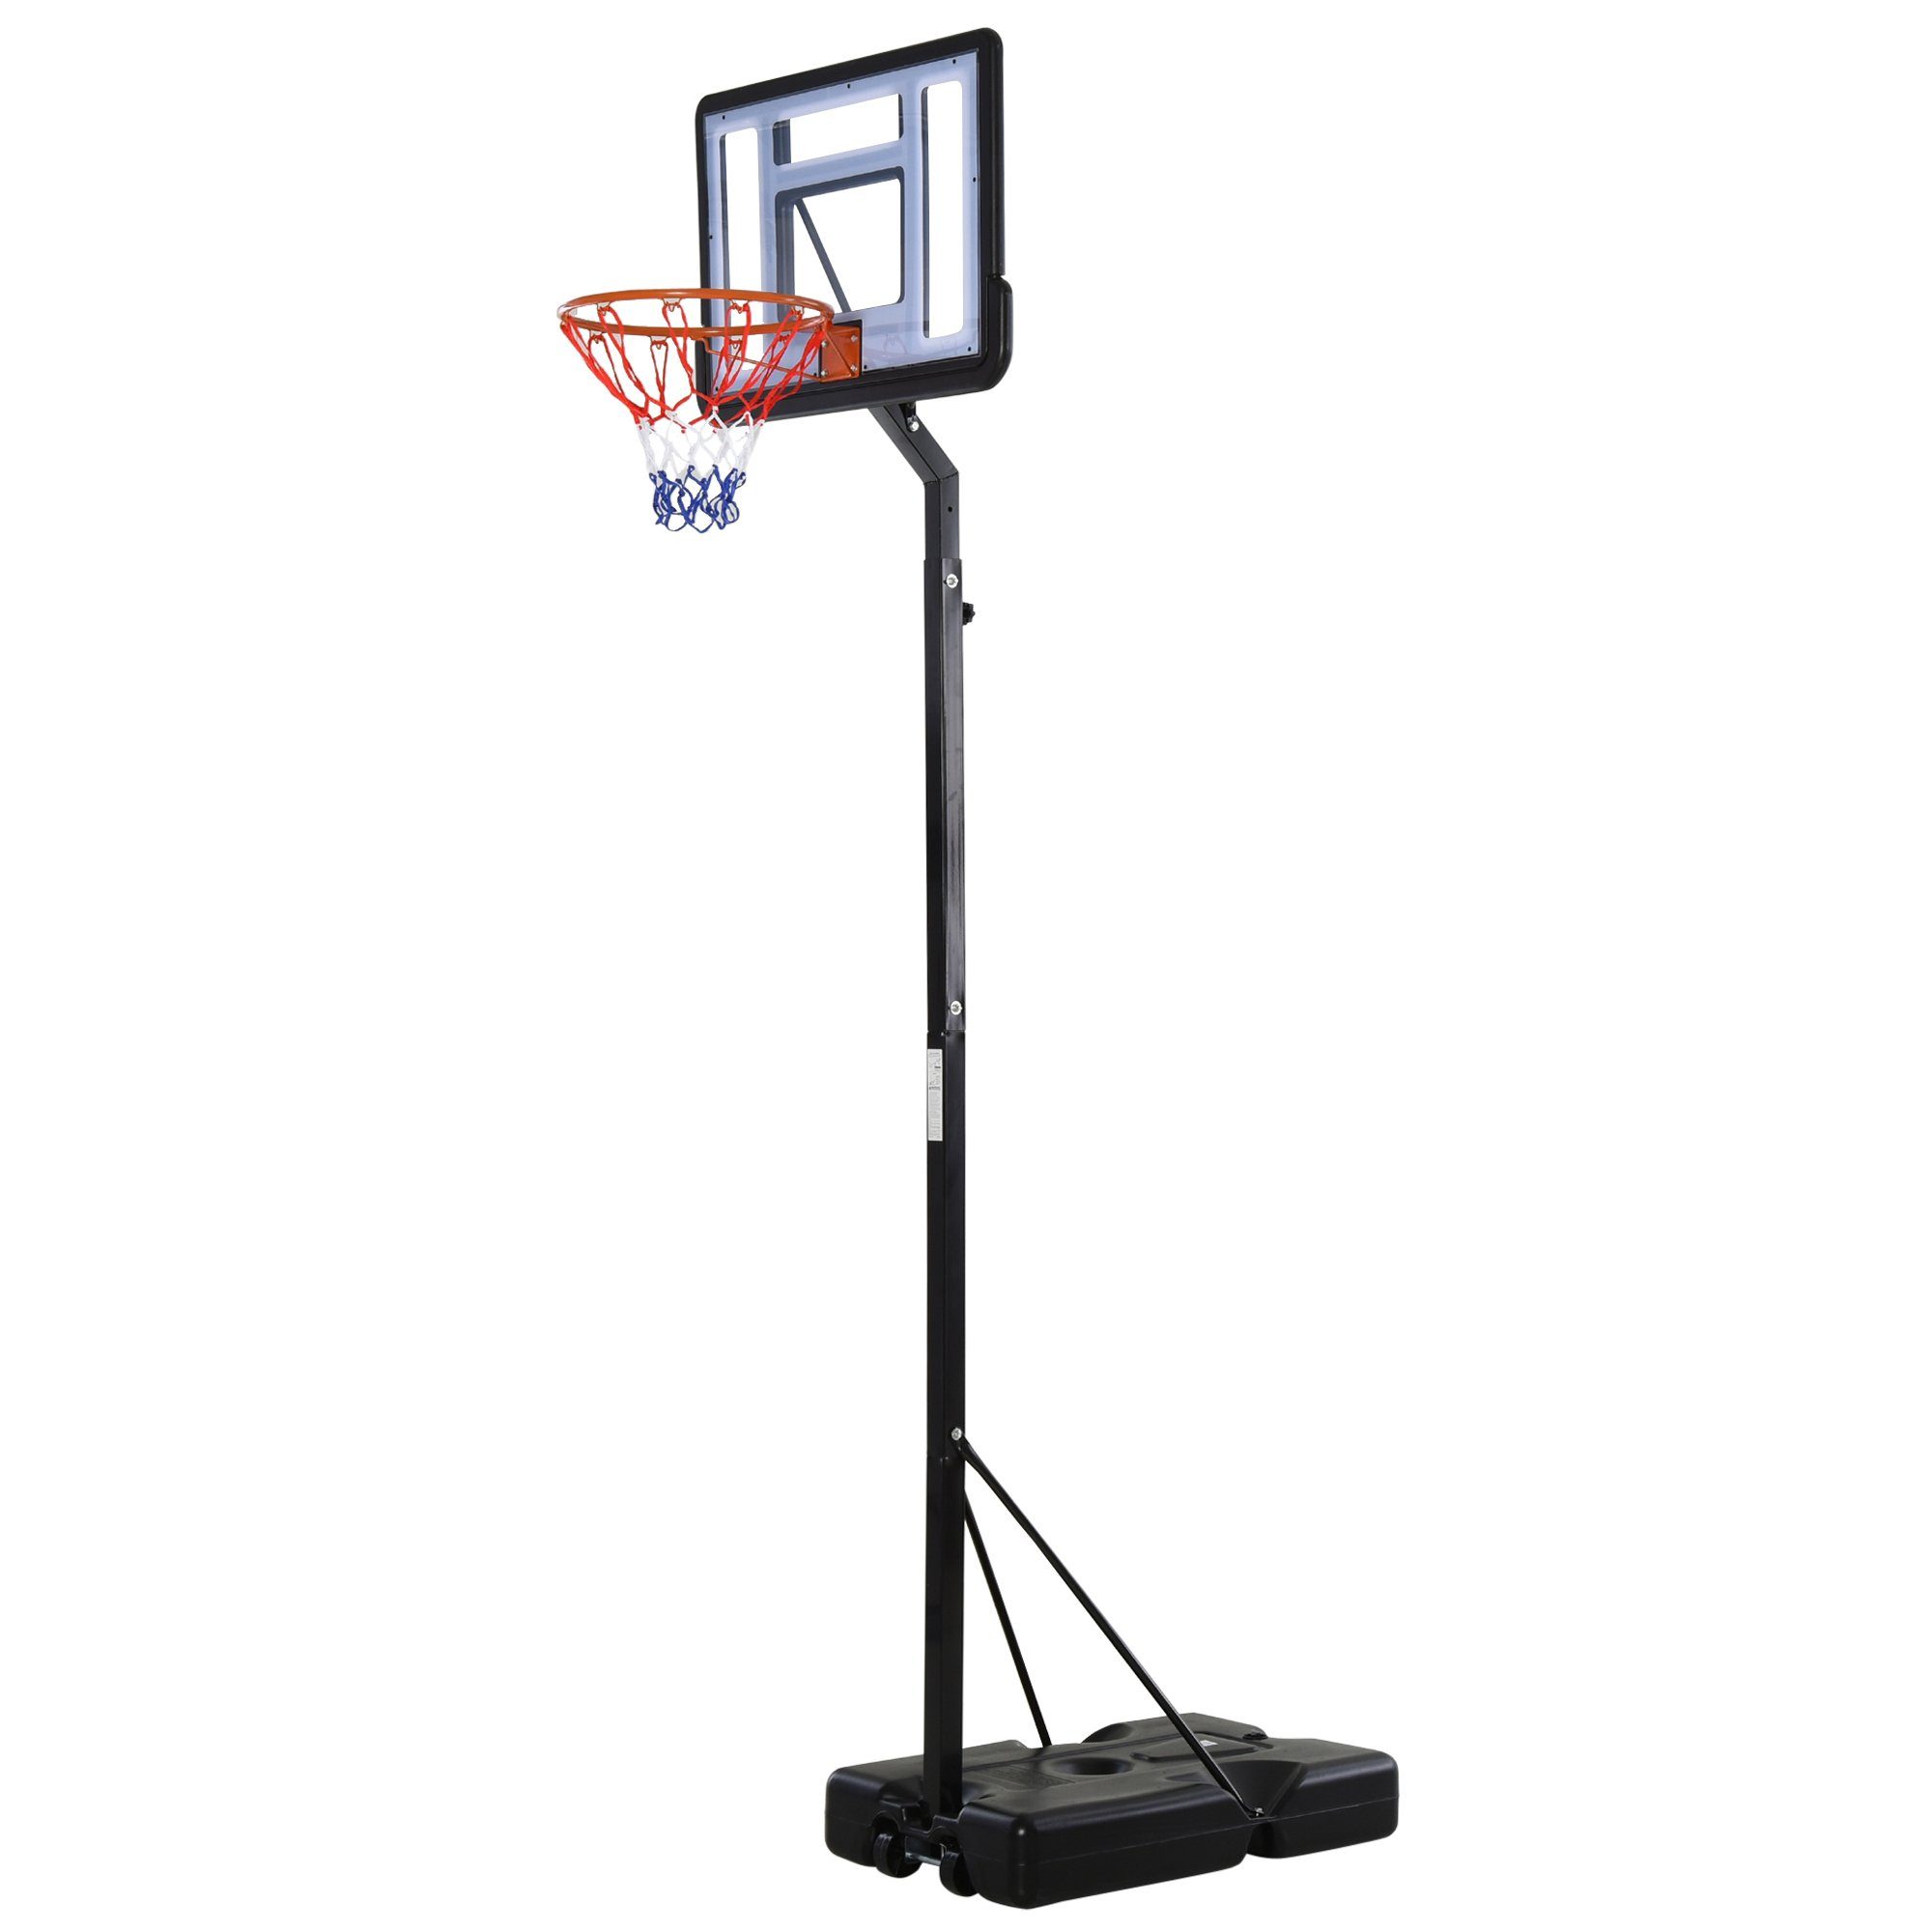 HOMCOM Basketballständer Basketballkorb mit 2 Rädern